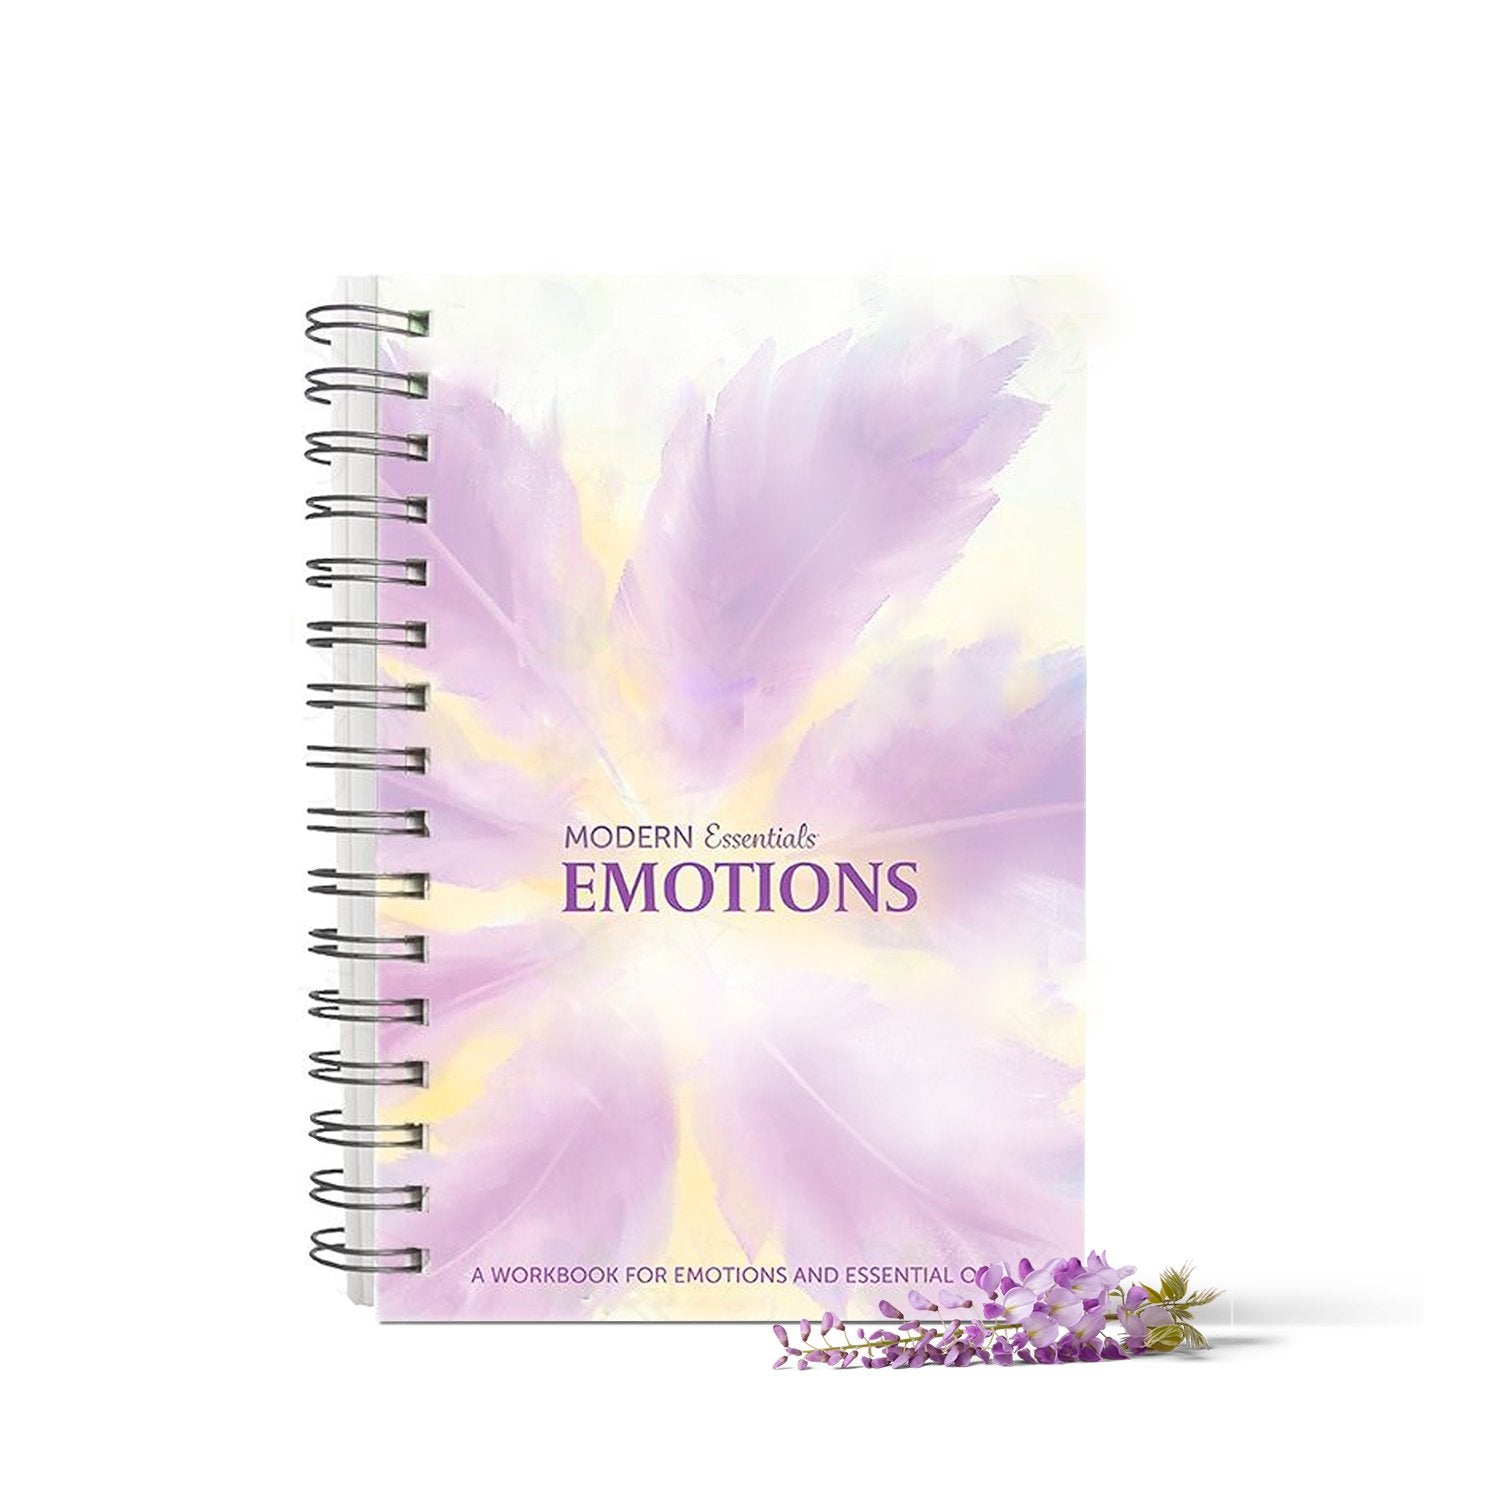 Modern Essentials Emotions: A Workbook for Emotions and Essential Oils książka w j. angielskim